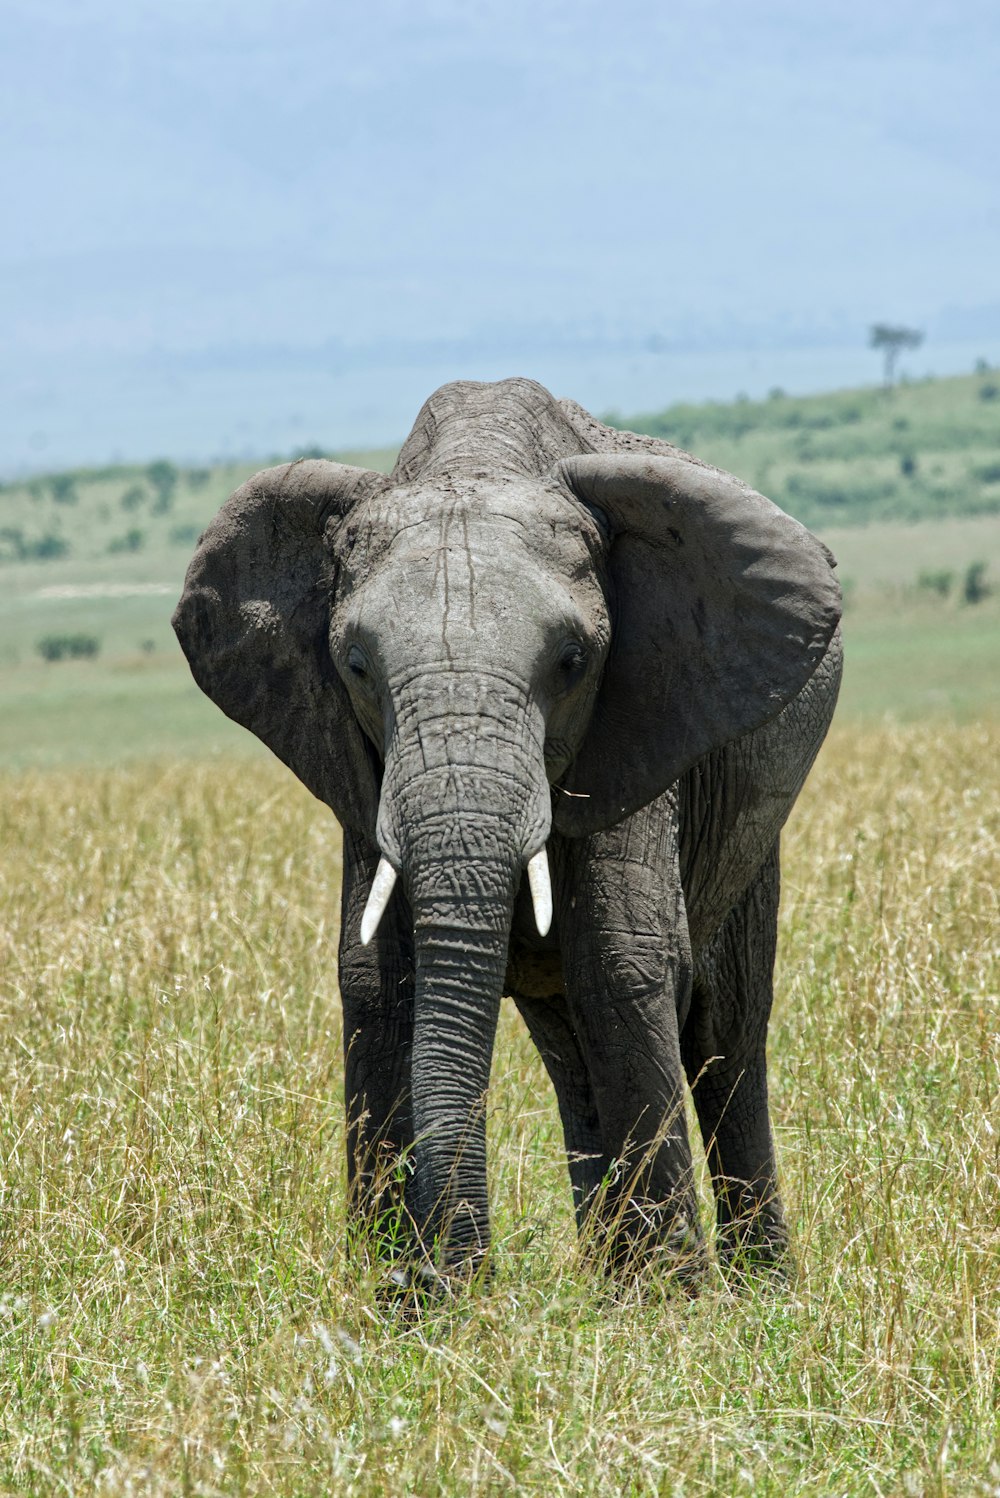 an elephant standing in a field of tall grass